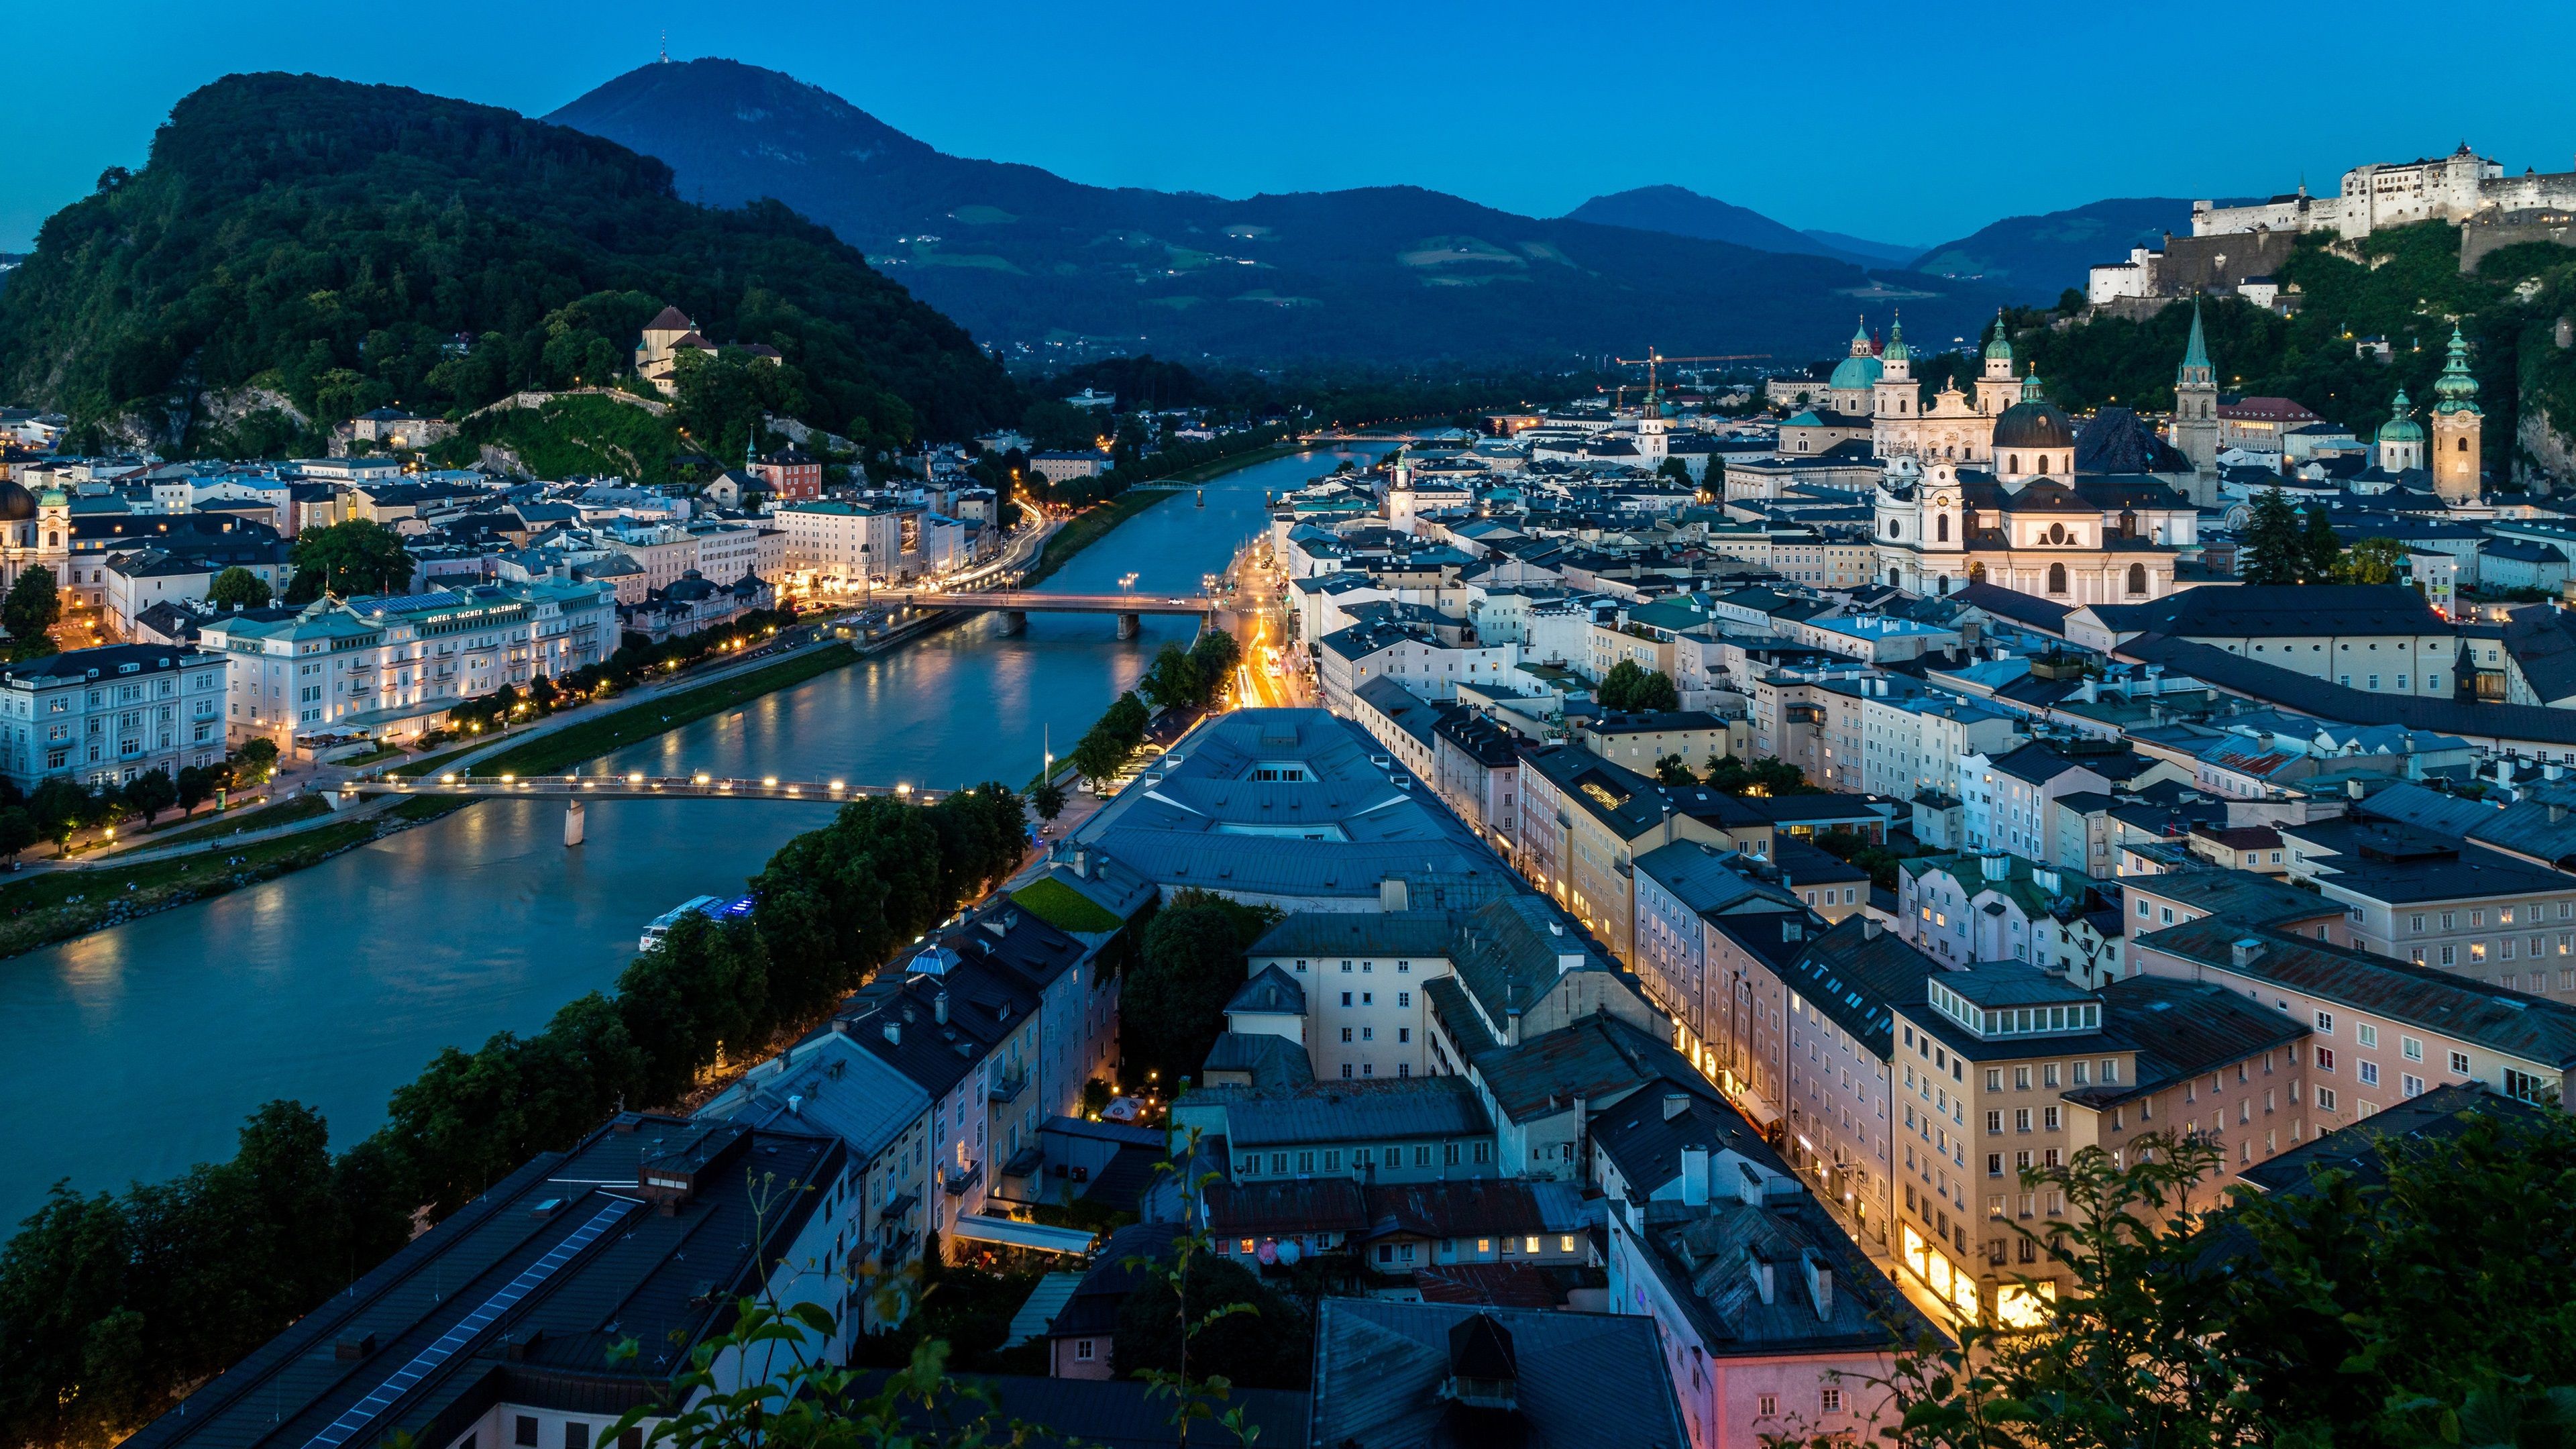 Wallpaper Salzburg, Austria, city night, river, bridge, houses, lights 3840x2160 UHD 4K Picture, Image